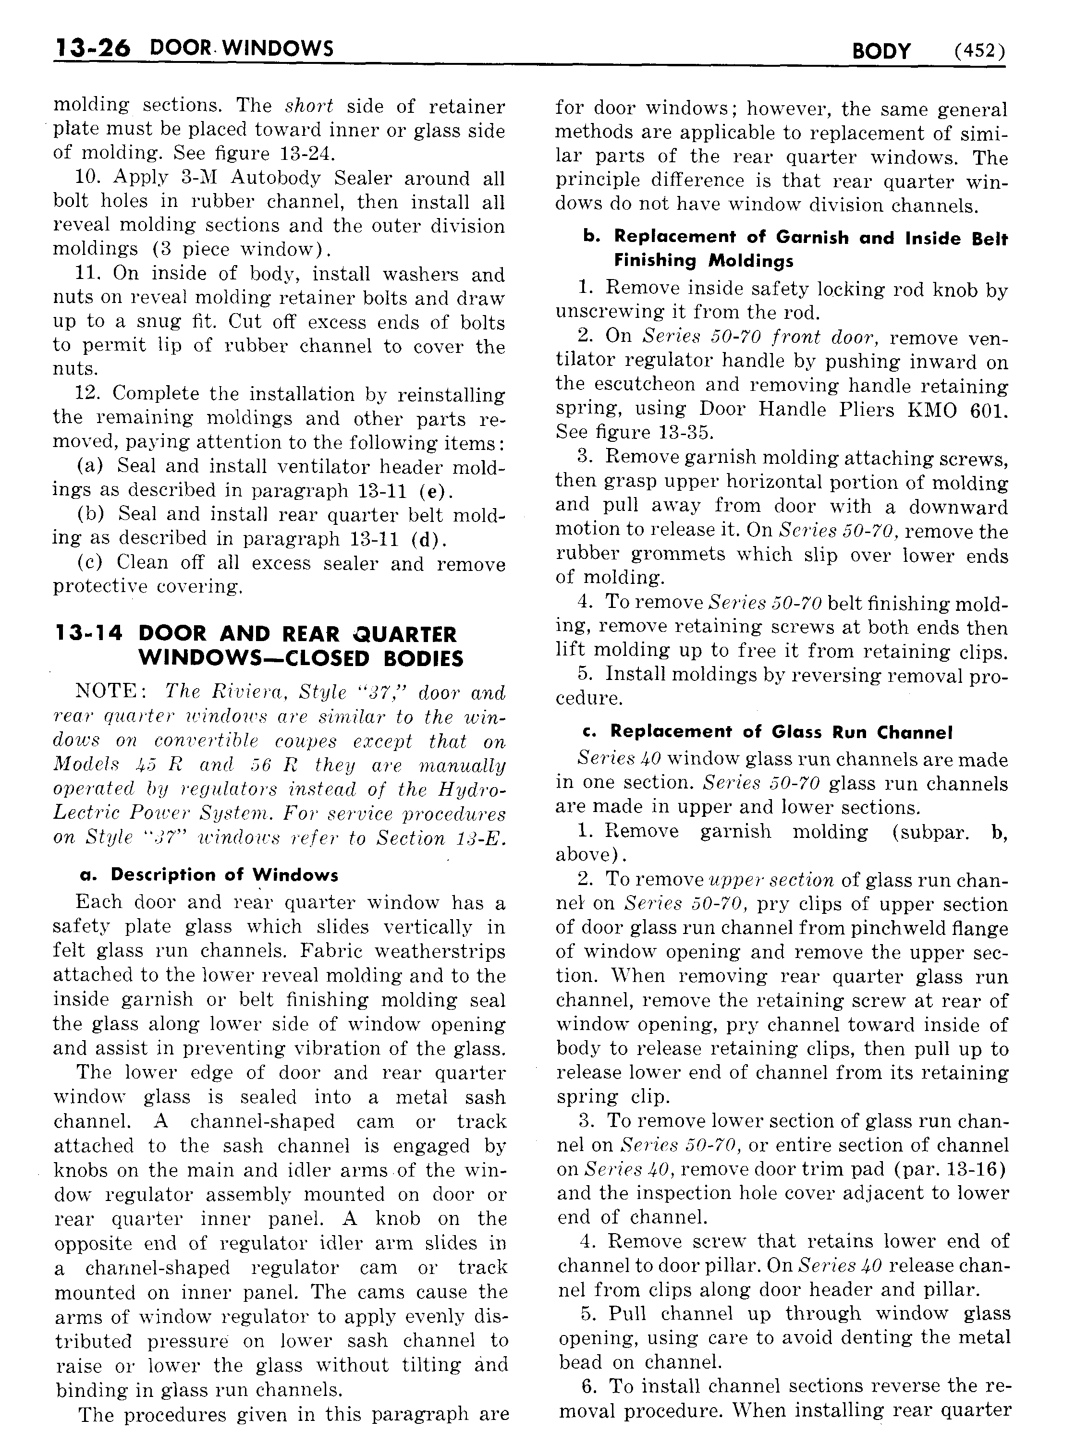 n_14 1951 Buick Shop Manual - Body-026-026.jpg